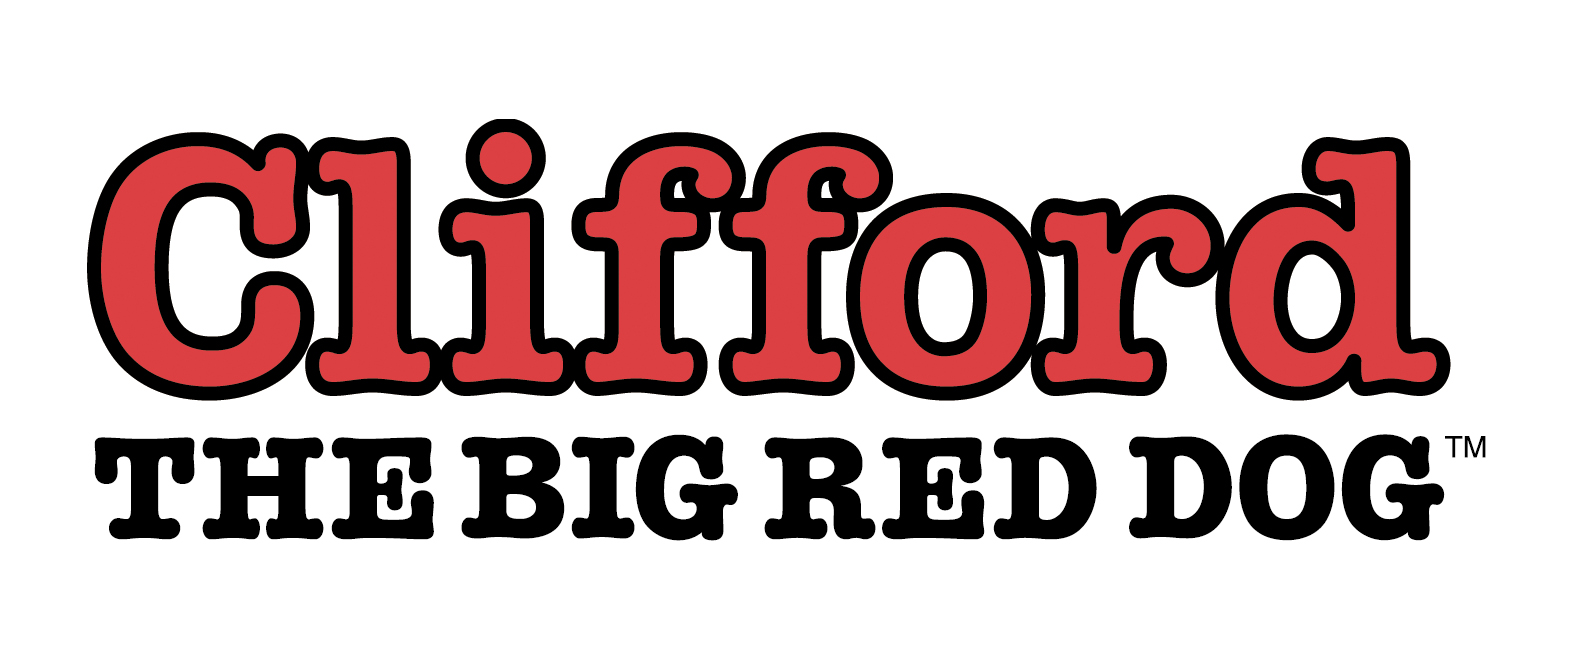 clip art clifford big red dog - photo #44